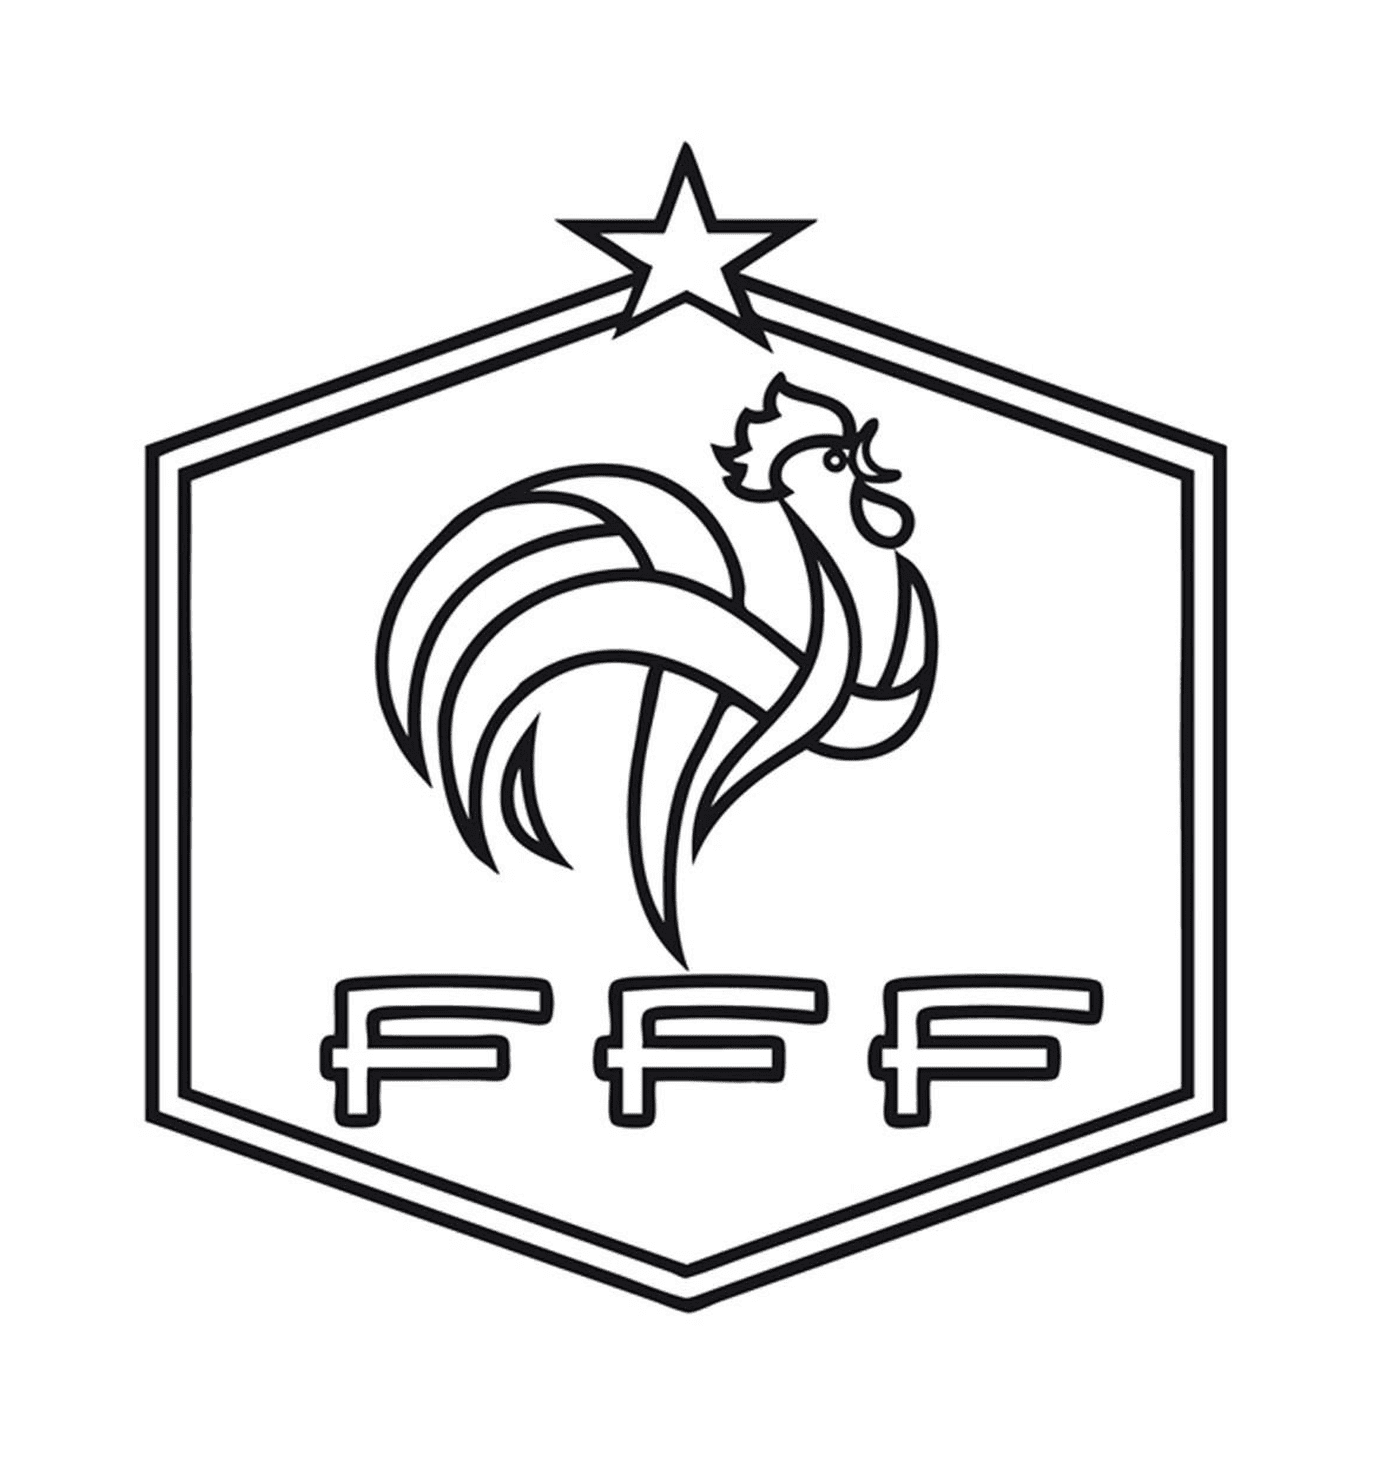  FFF 的标志性公鸡 